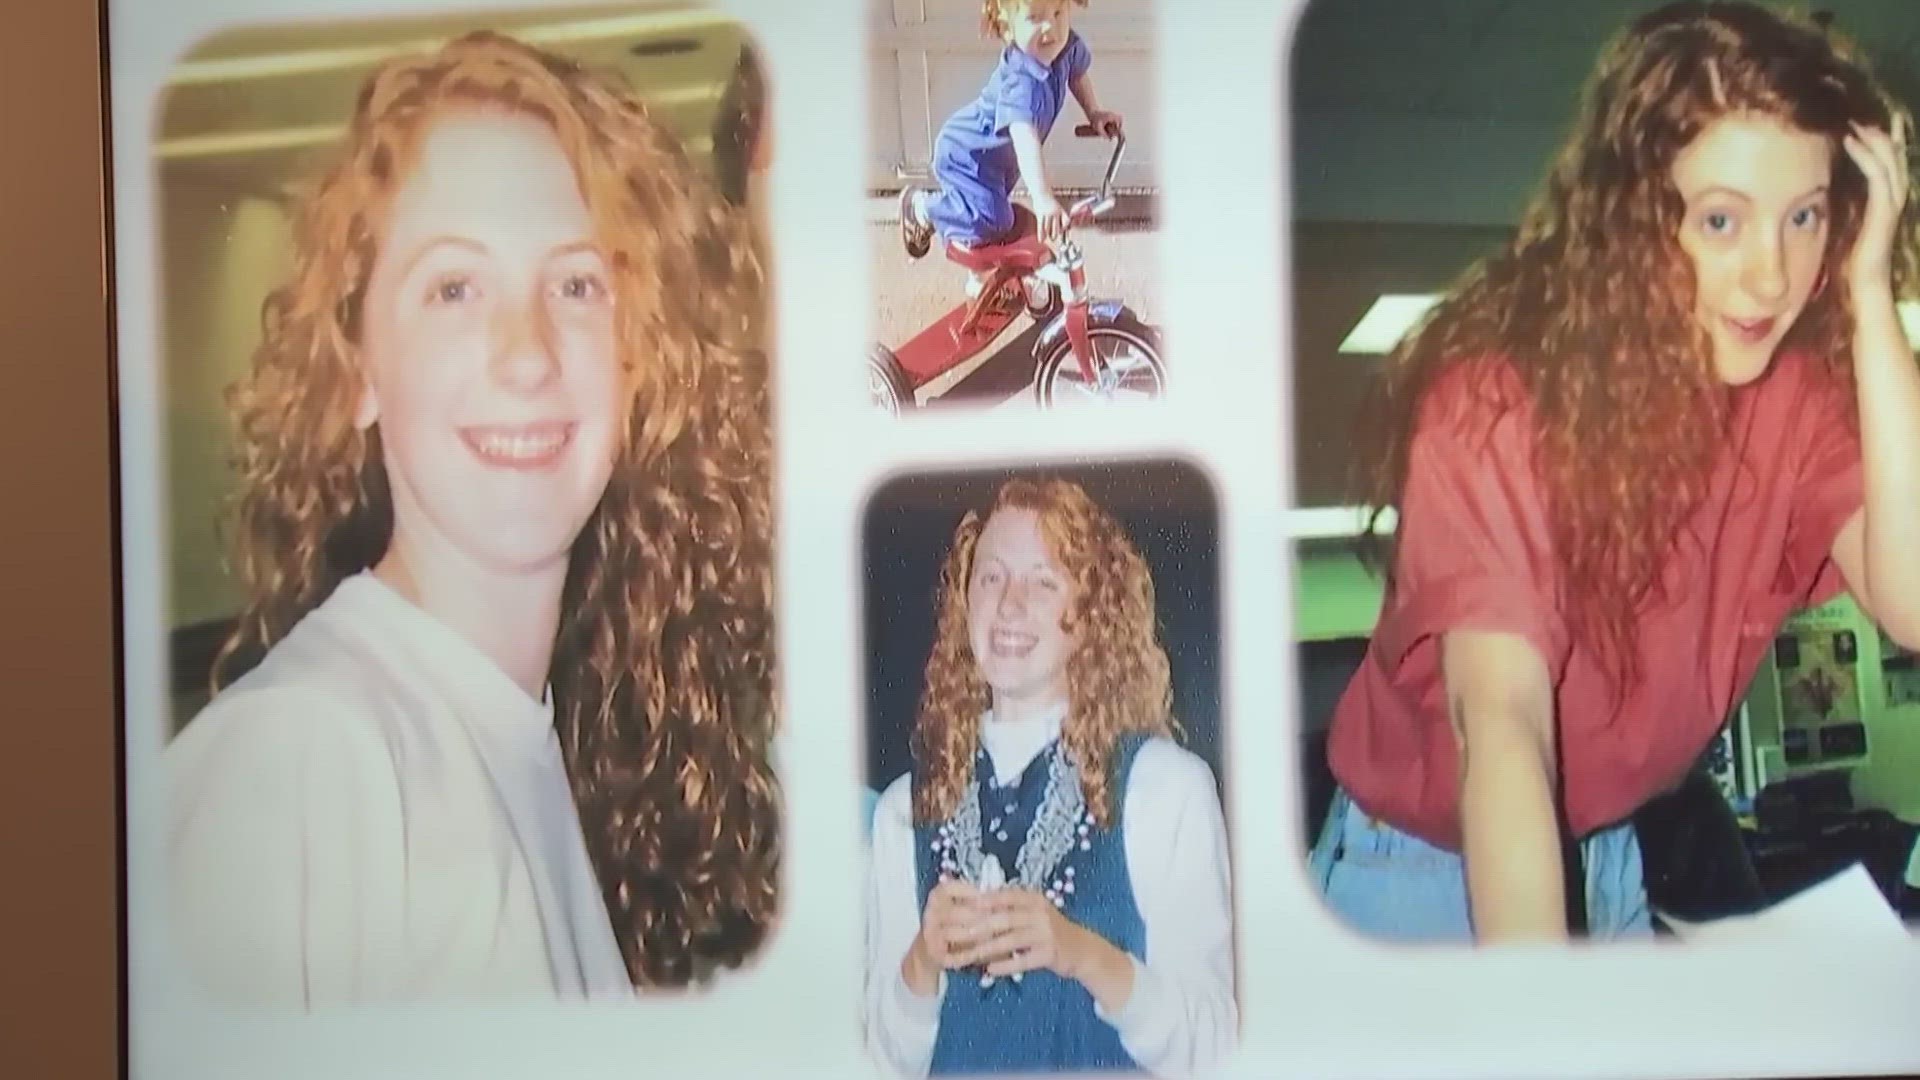 Sarah Yarborough was found dead in Federal Way on Dec. 14, 1991.